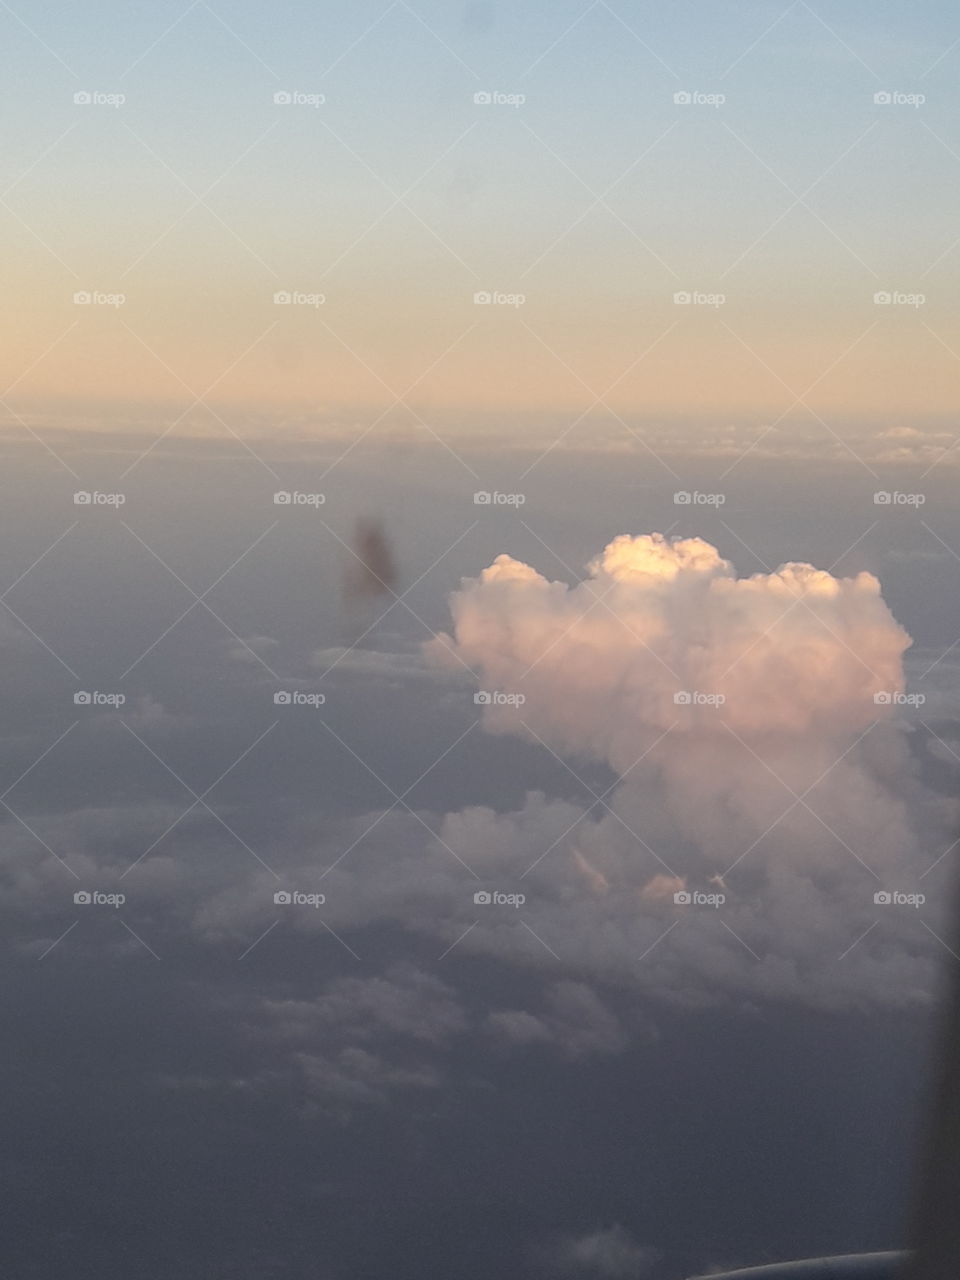 Cloud view windows of the flight
